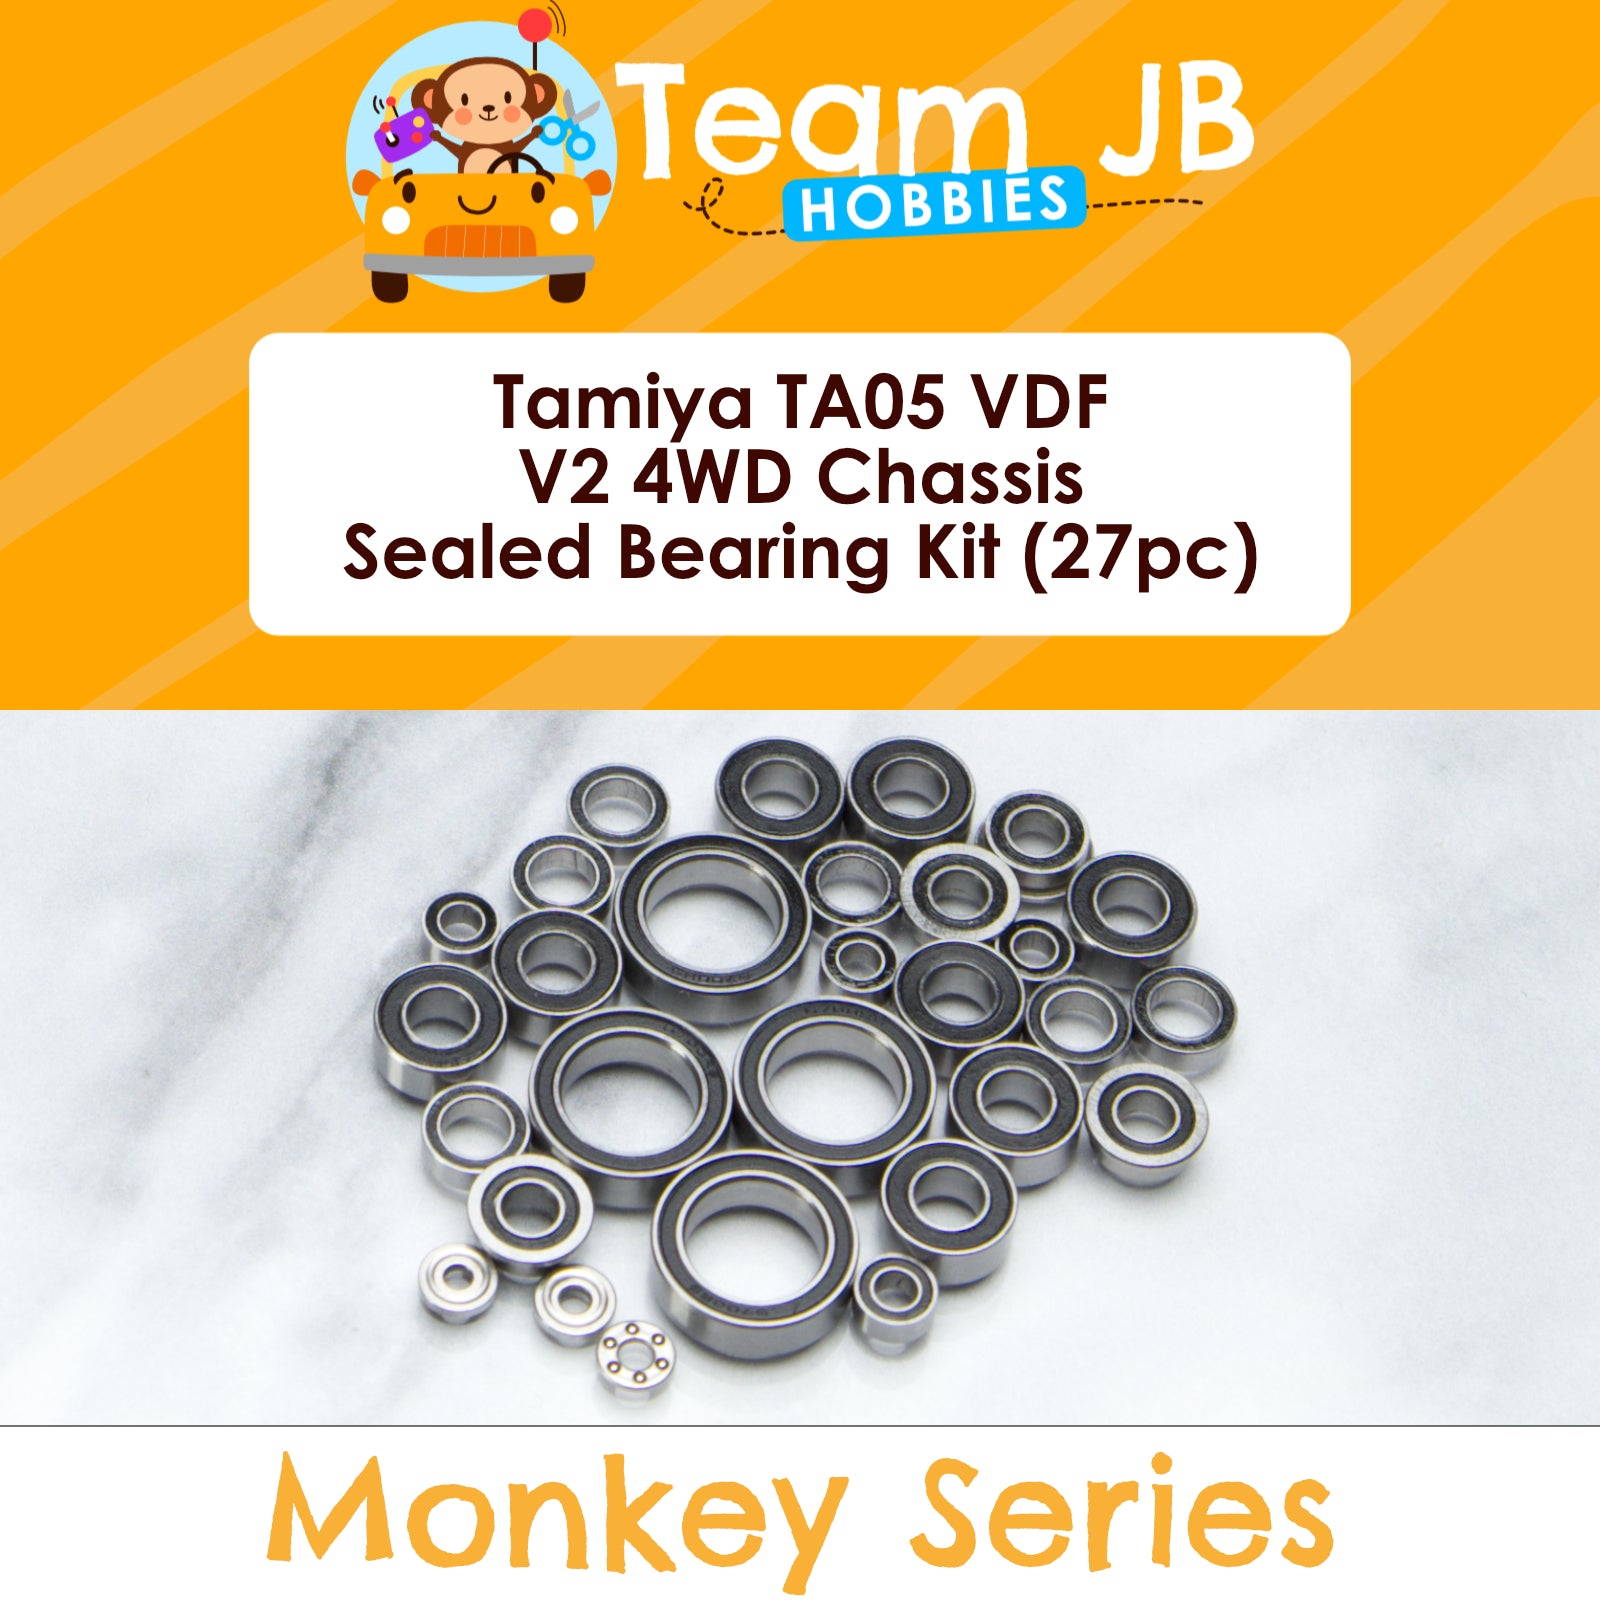 Tamiya TA05 VDF V2 4WD Chassis - Sealed Bearing Kit